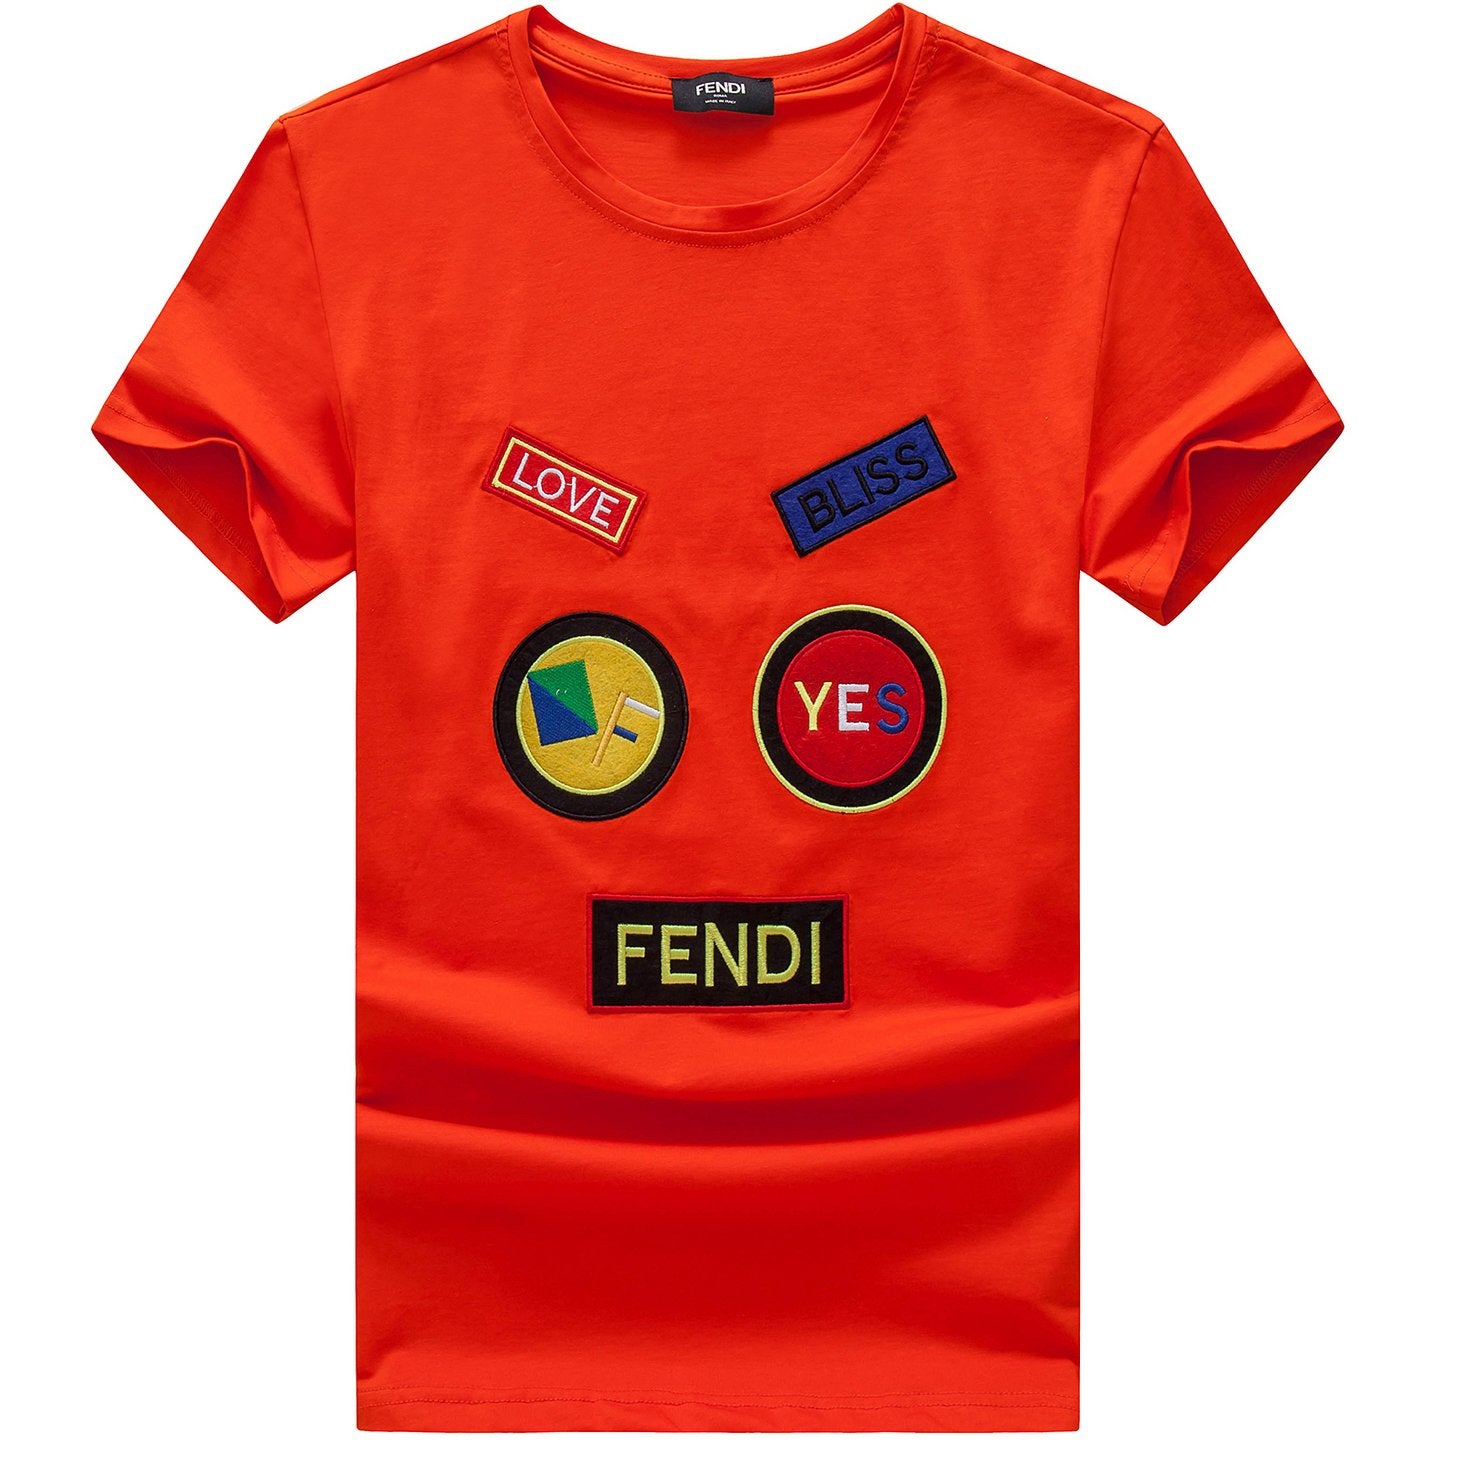 Boys & Men FENDI T-Shirt Top Tee